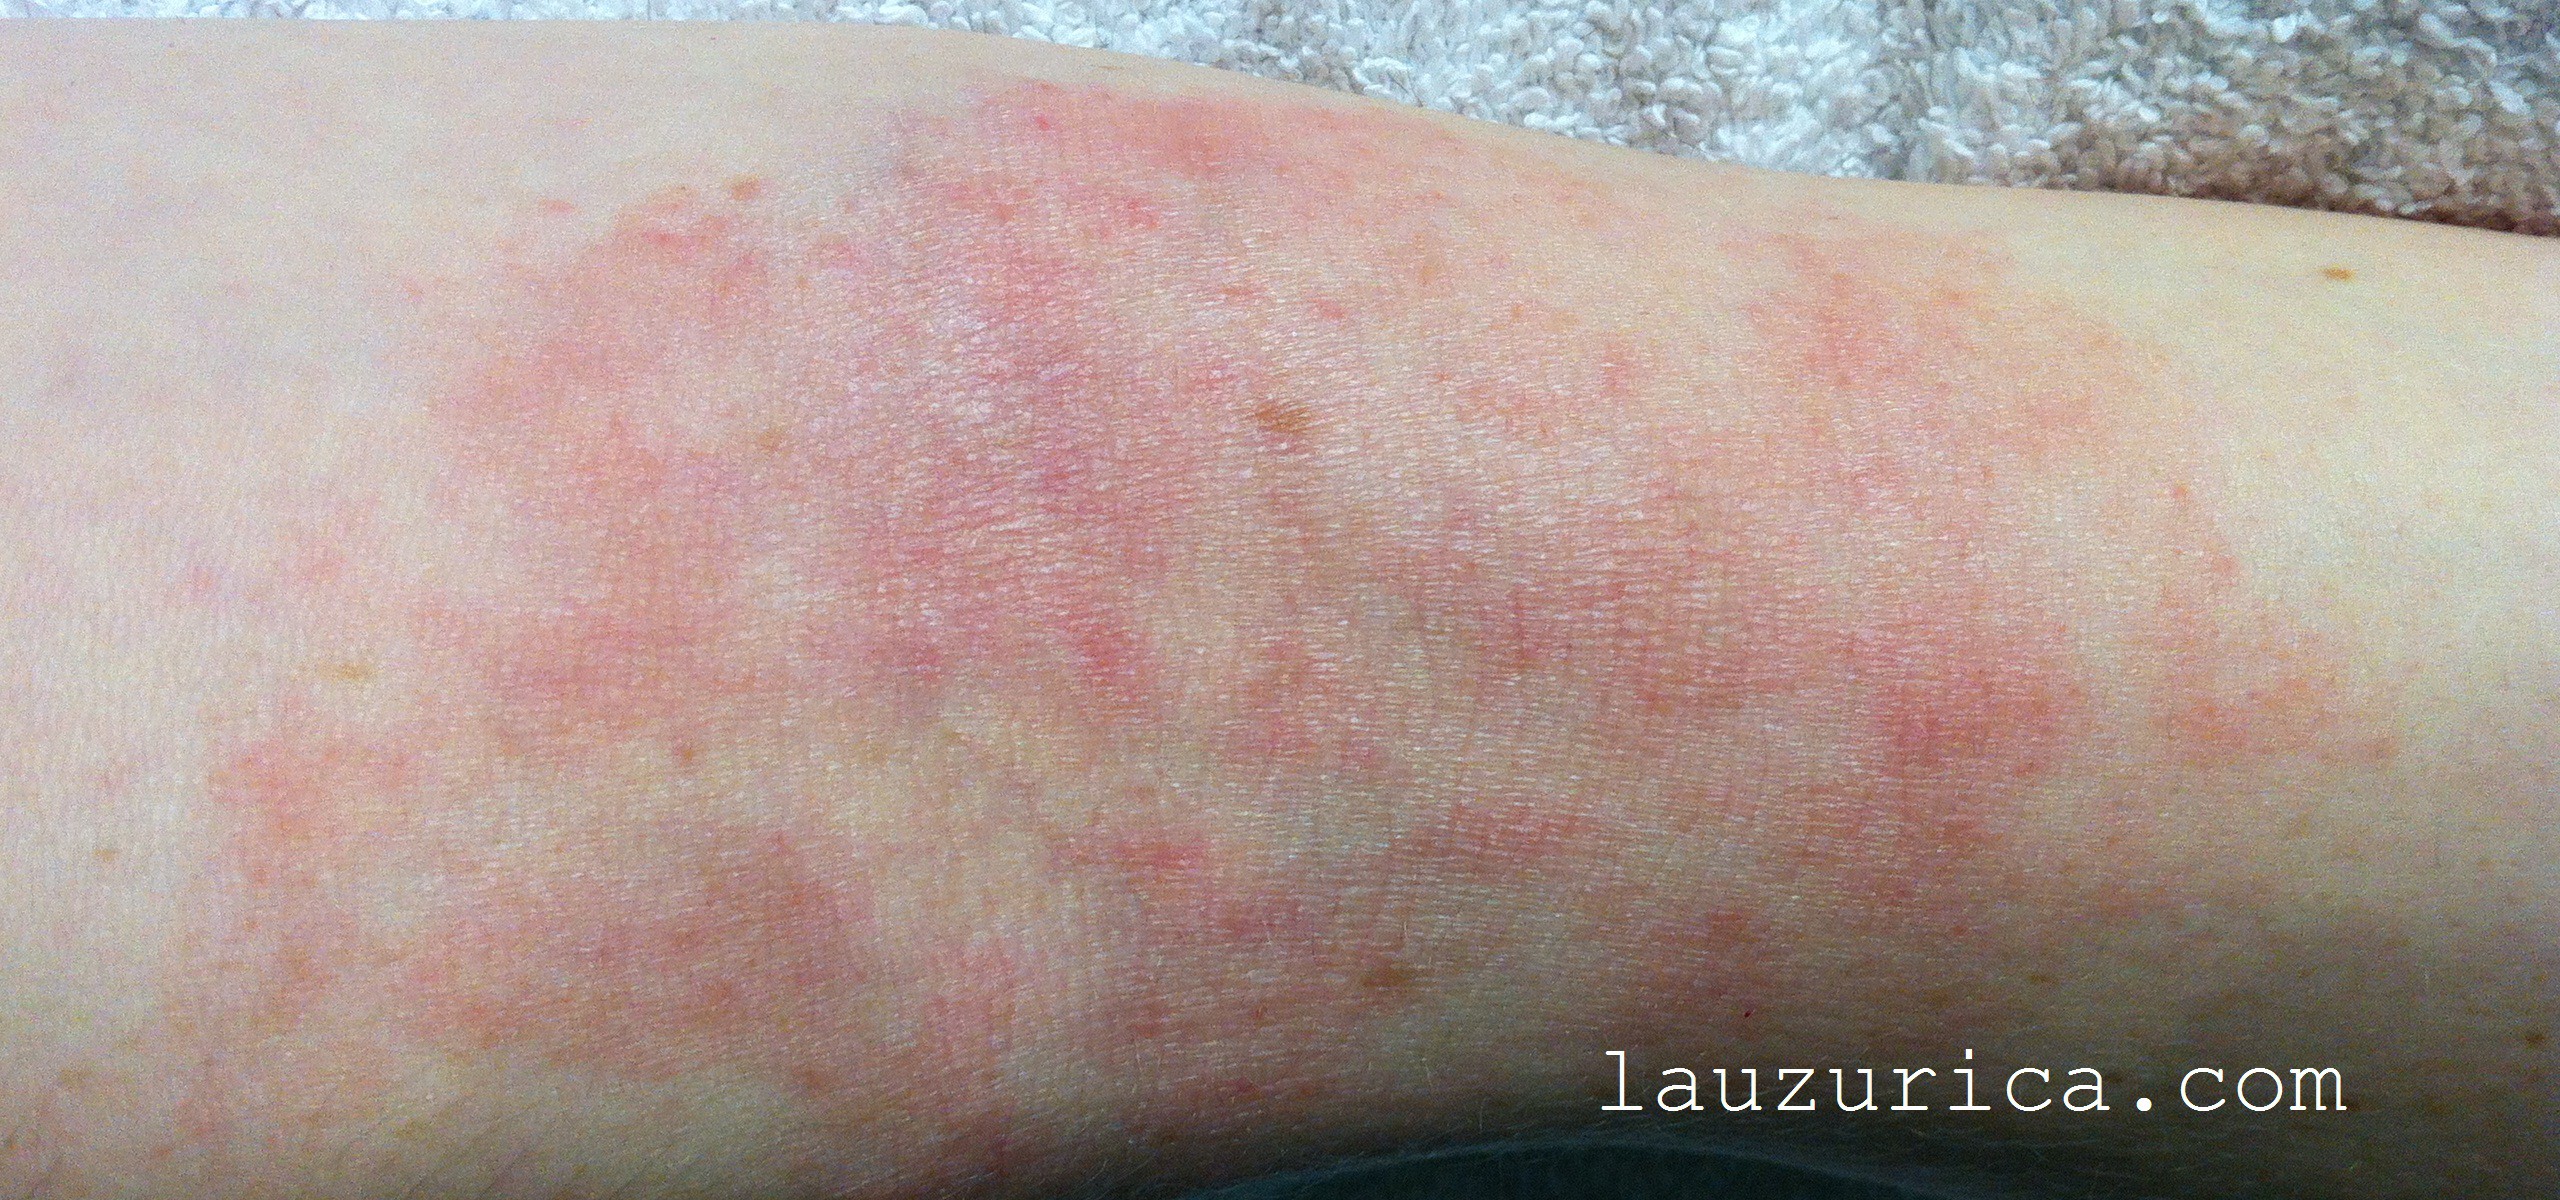 Eczema (Atopic Dermatitis) Quiz: Treatment, Symptoms ...